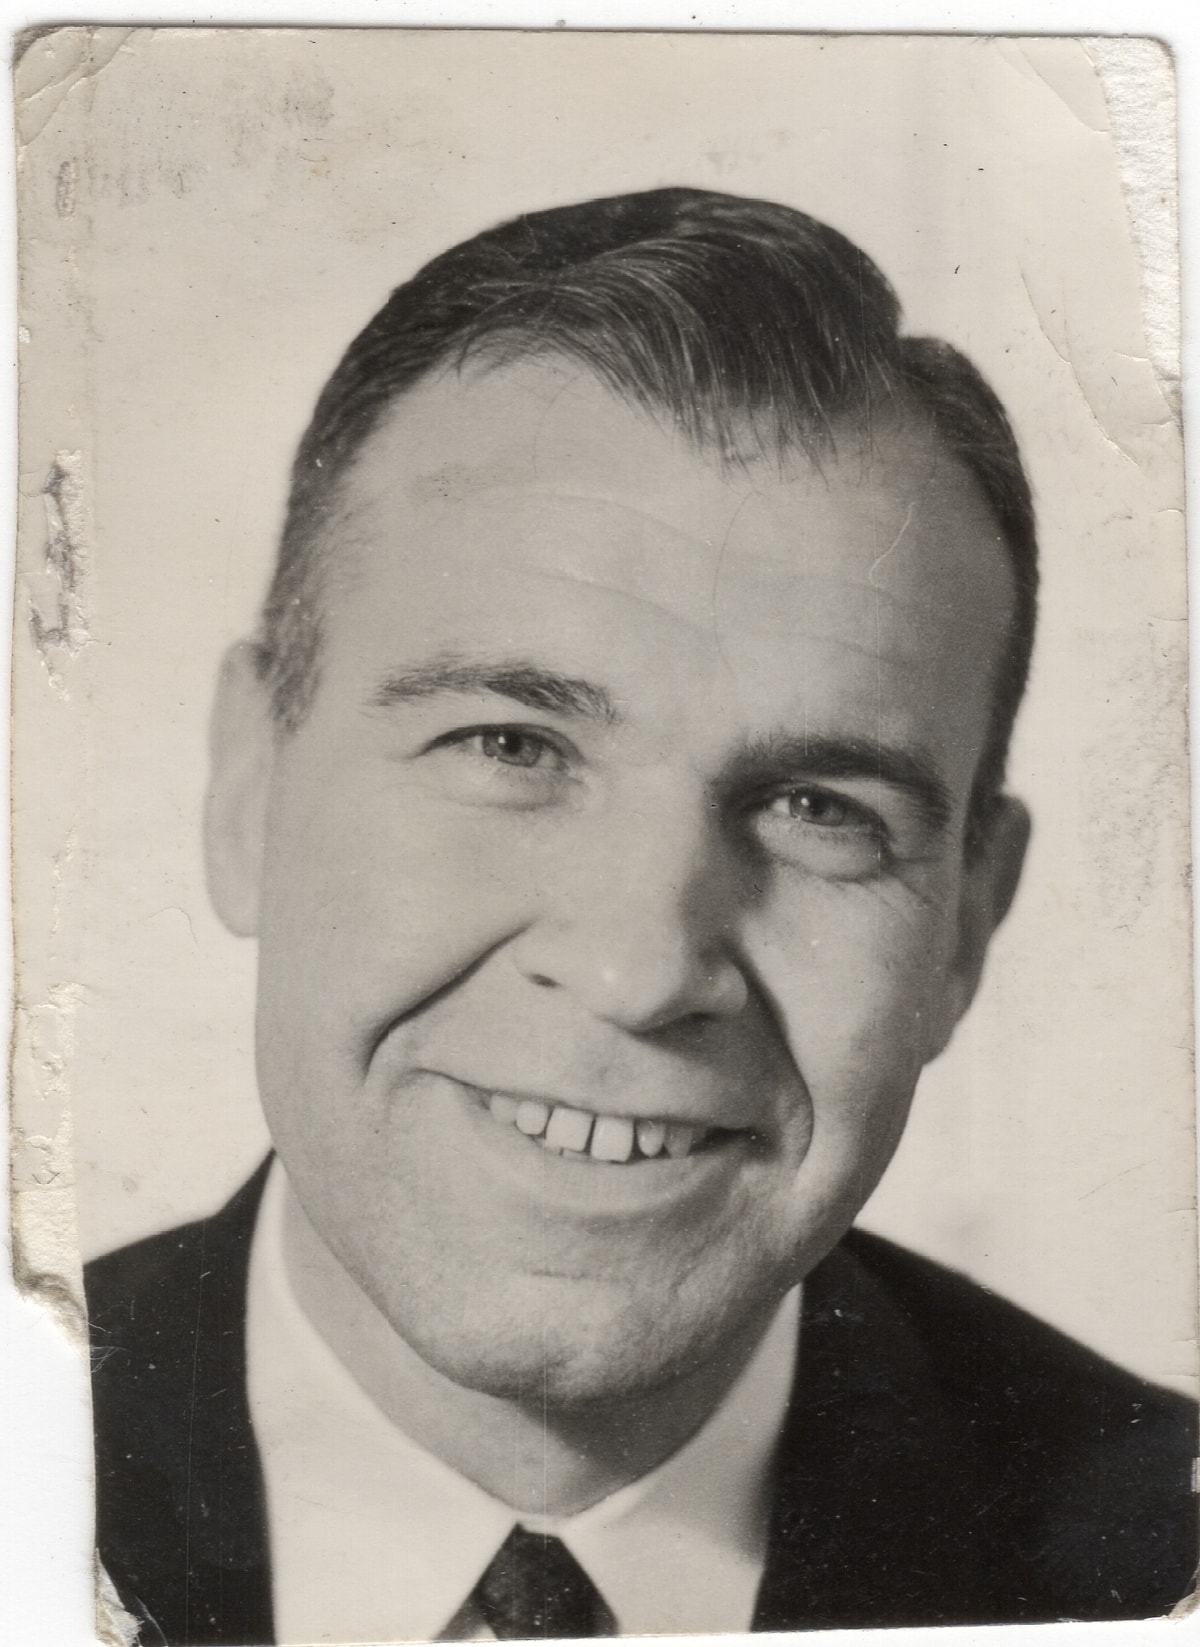 Photo of the Rev. Lucien De Wulf taken in the 1960s